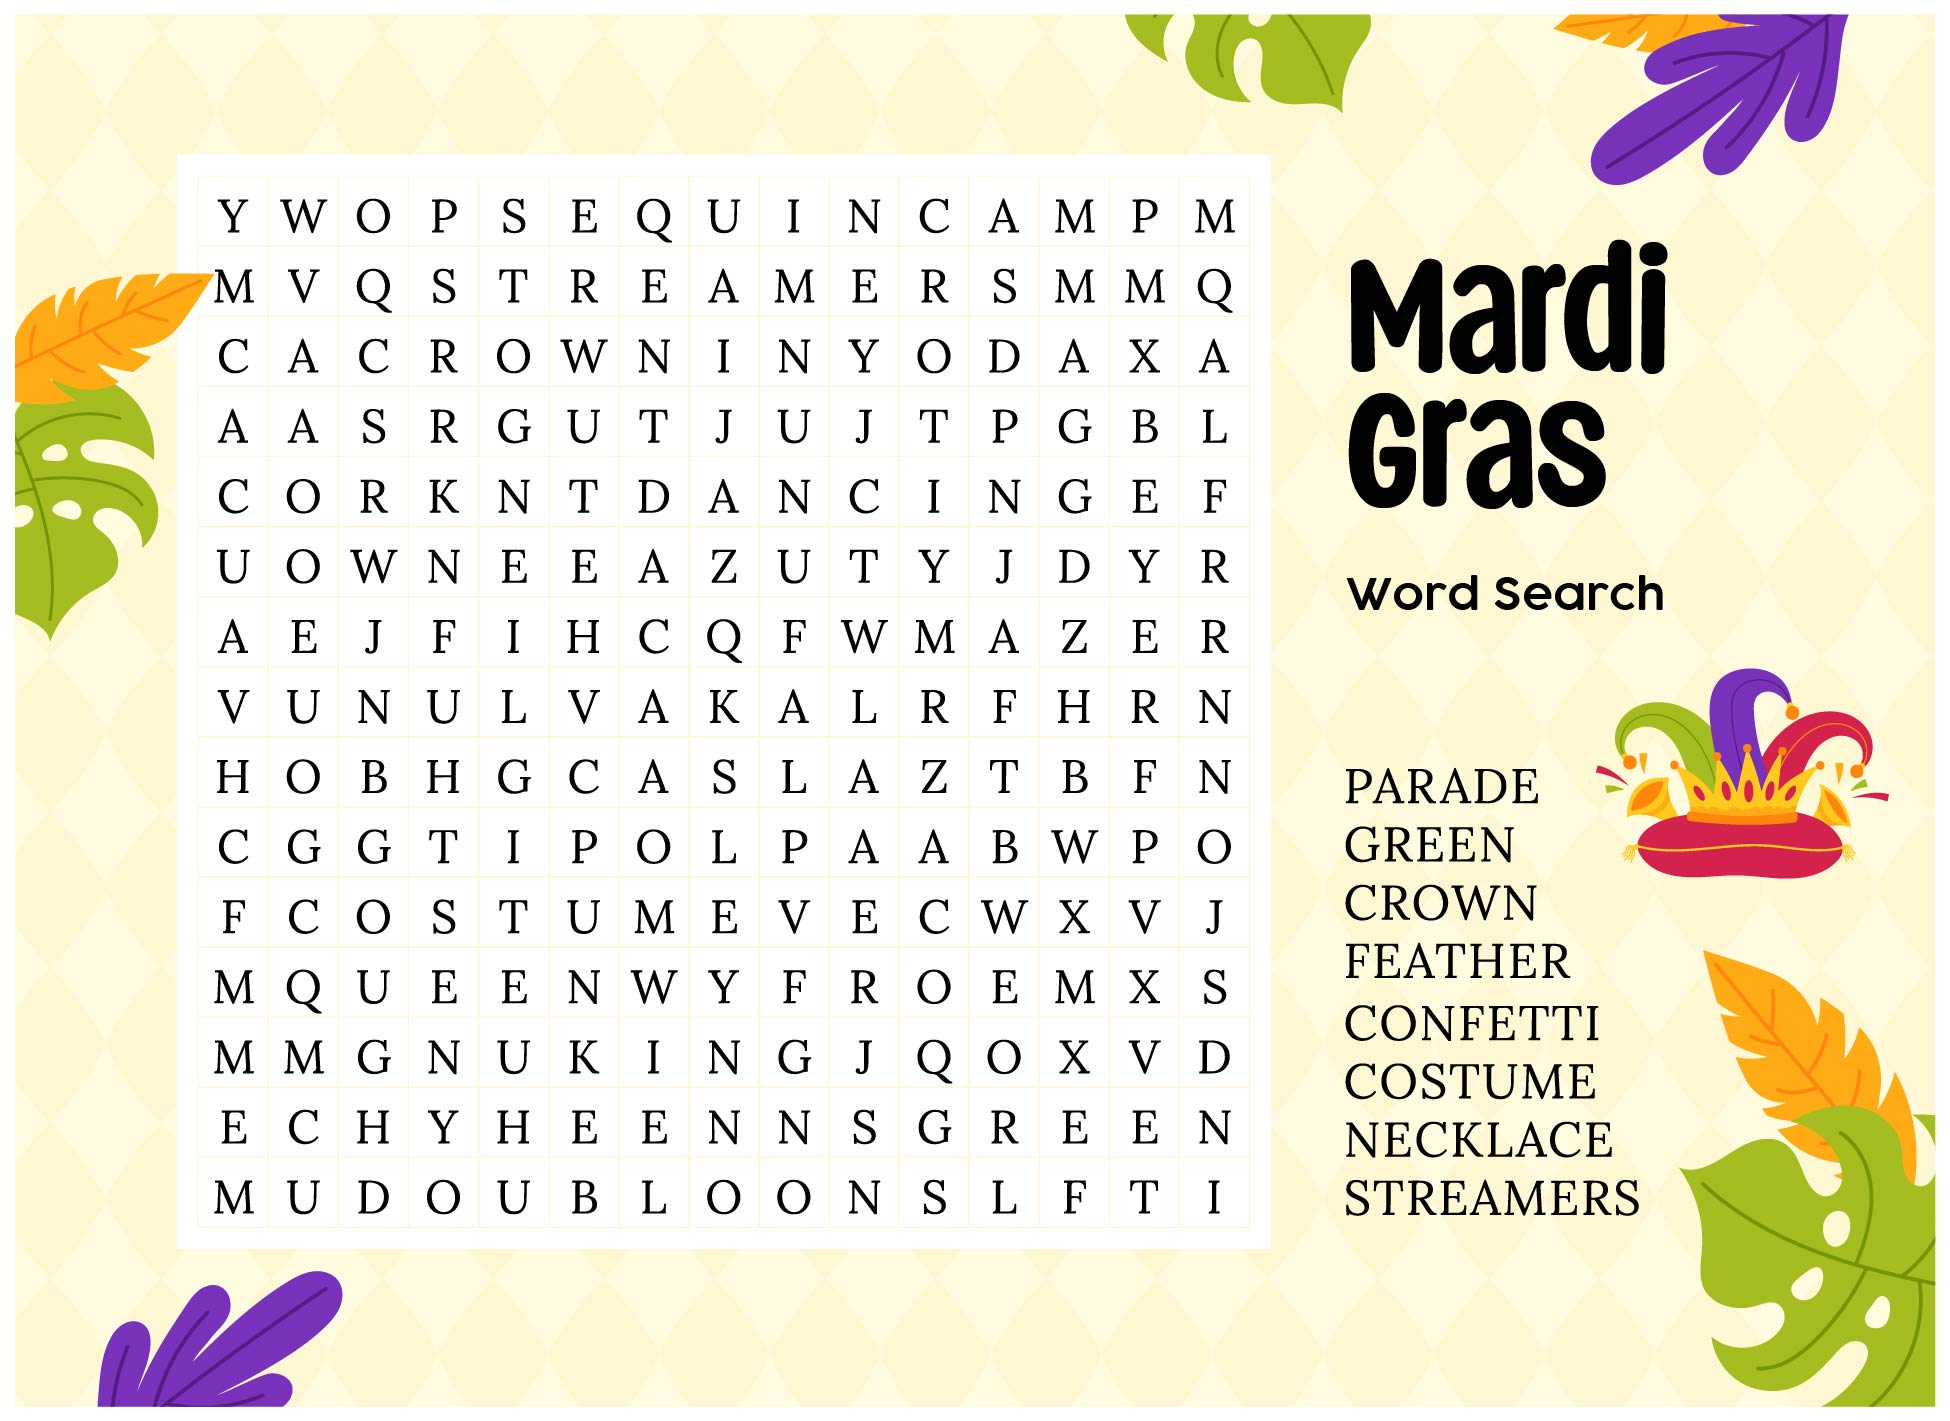 Mardi Gras Crossword Puzzle Printable